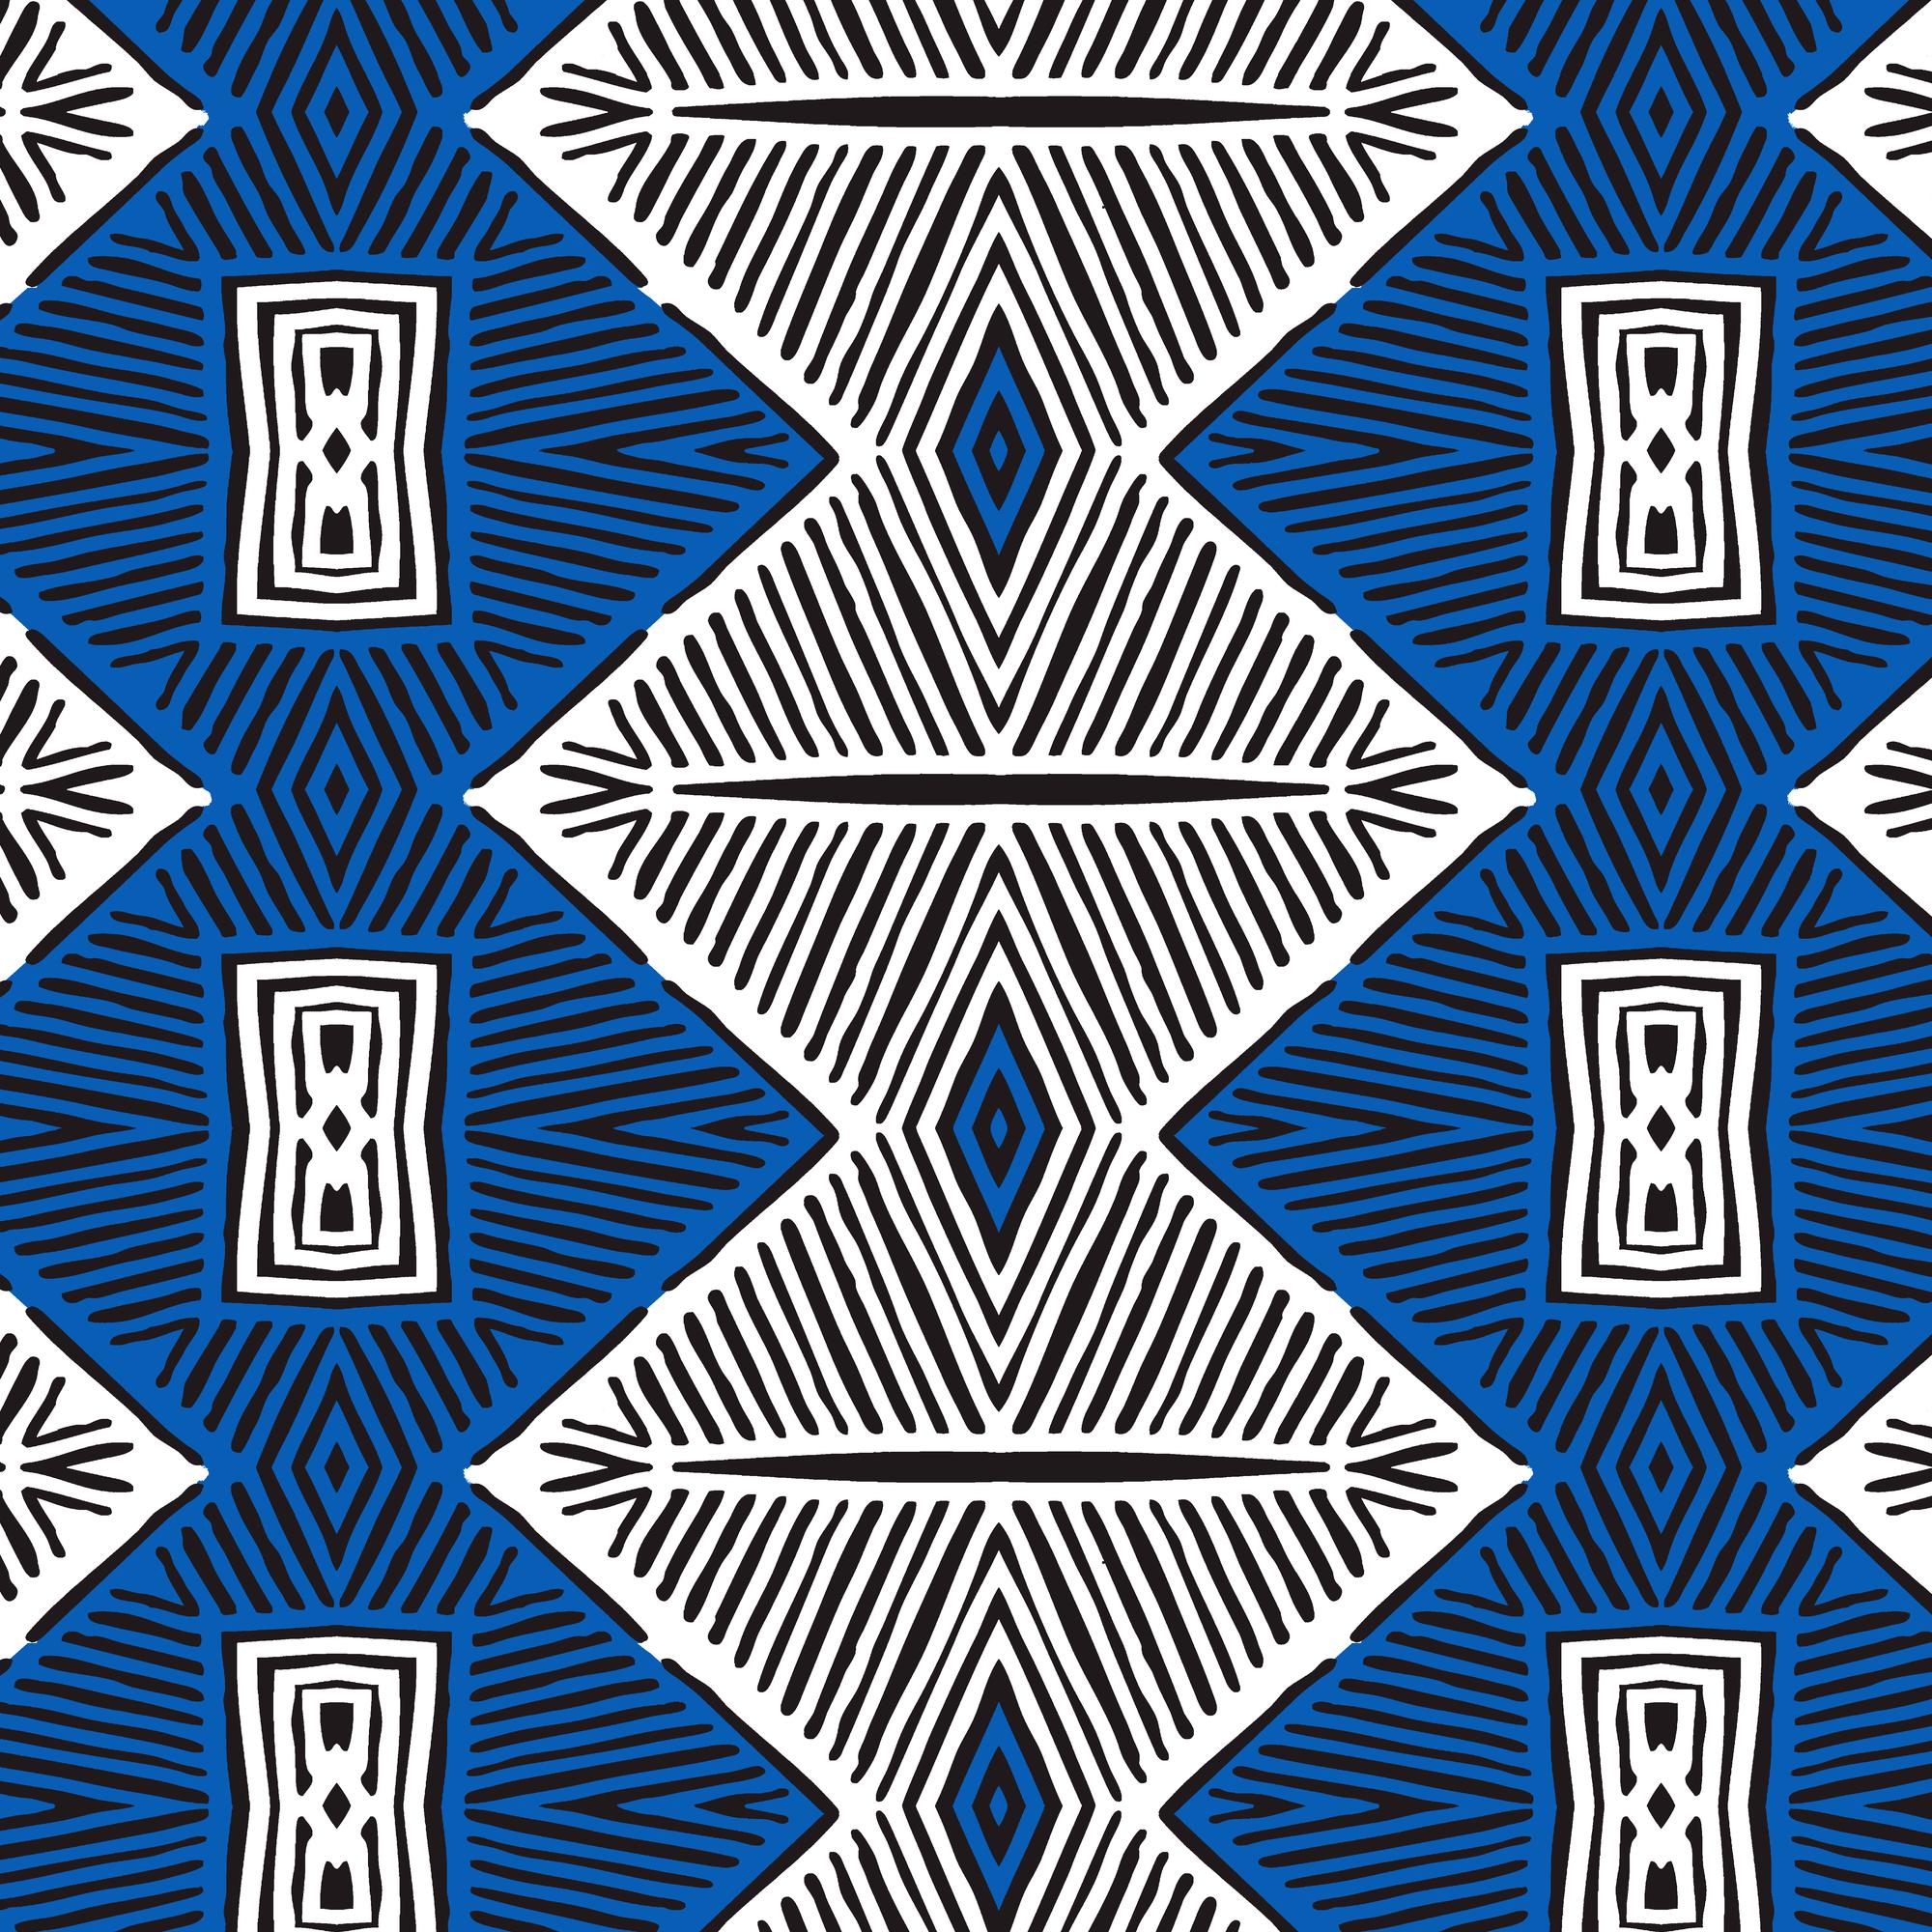 Morogoro in Blau-Weiß mit Muster | Kollektion Tansania IN&OUT 